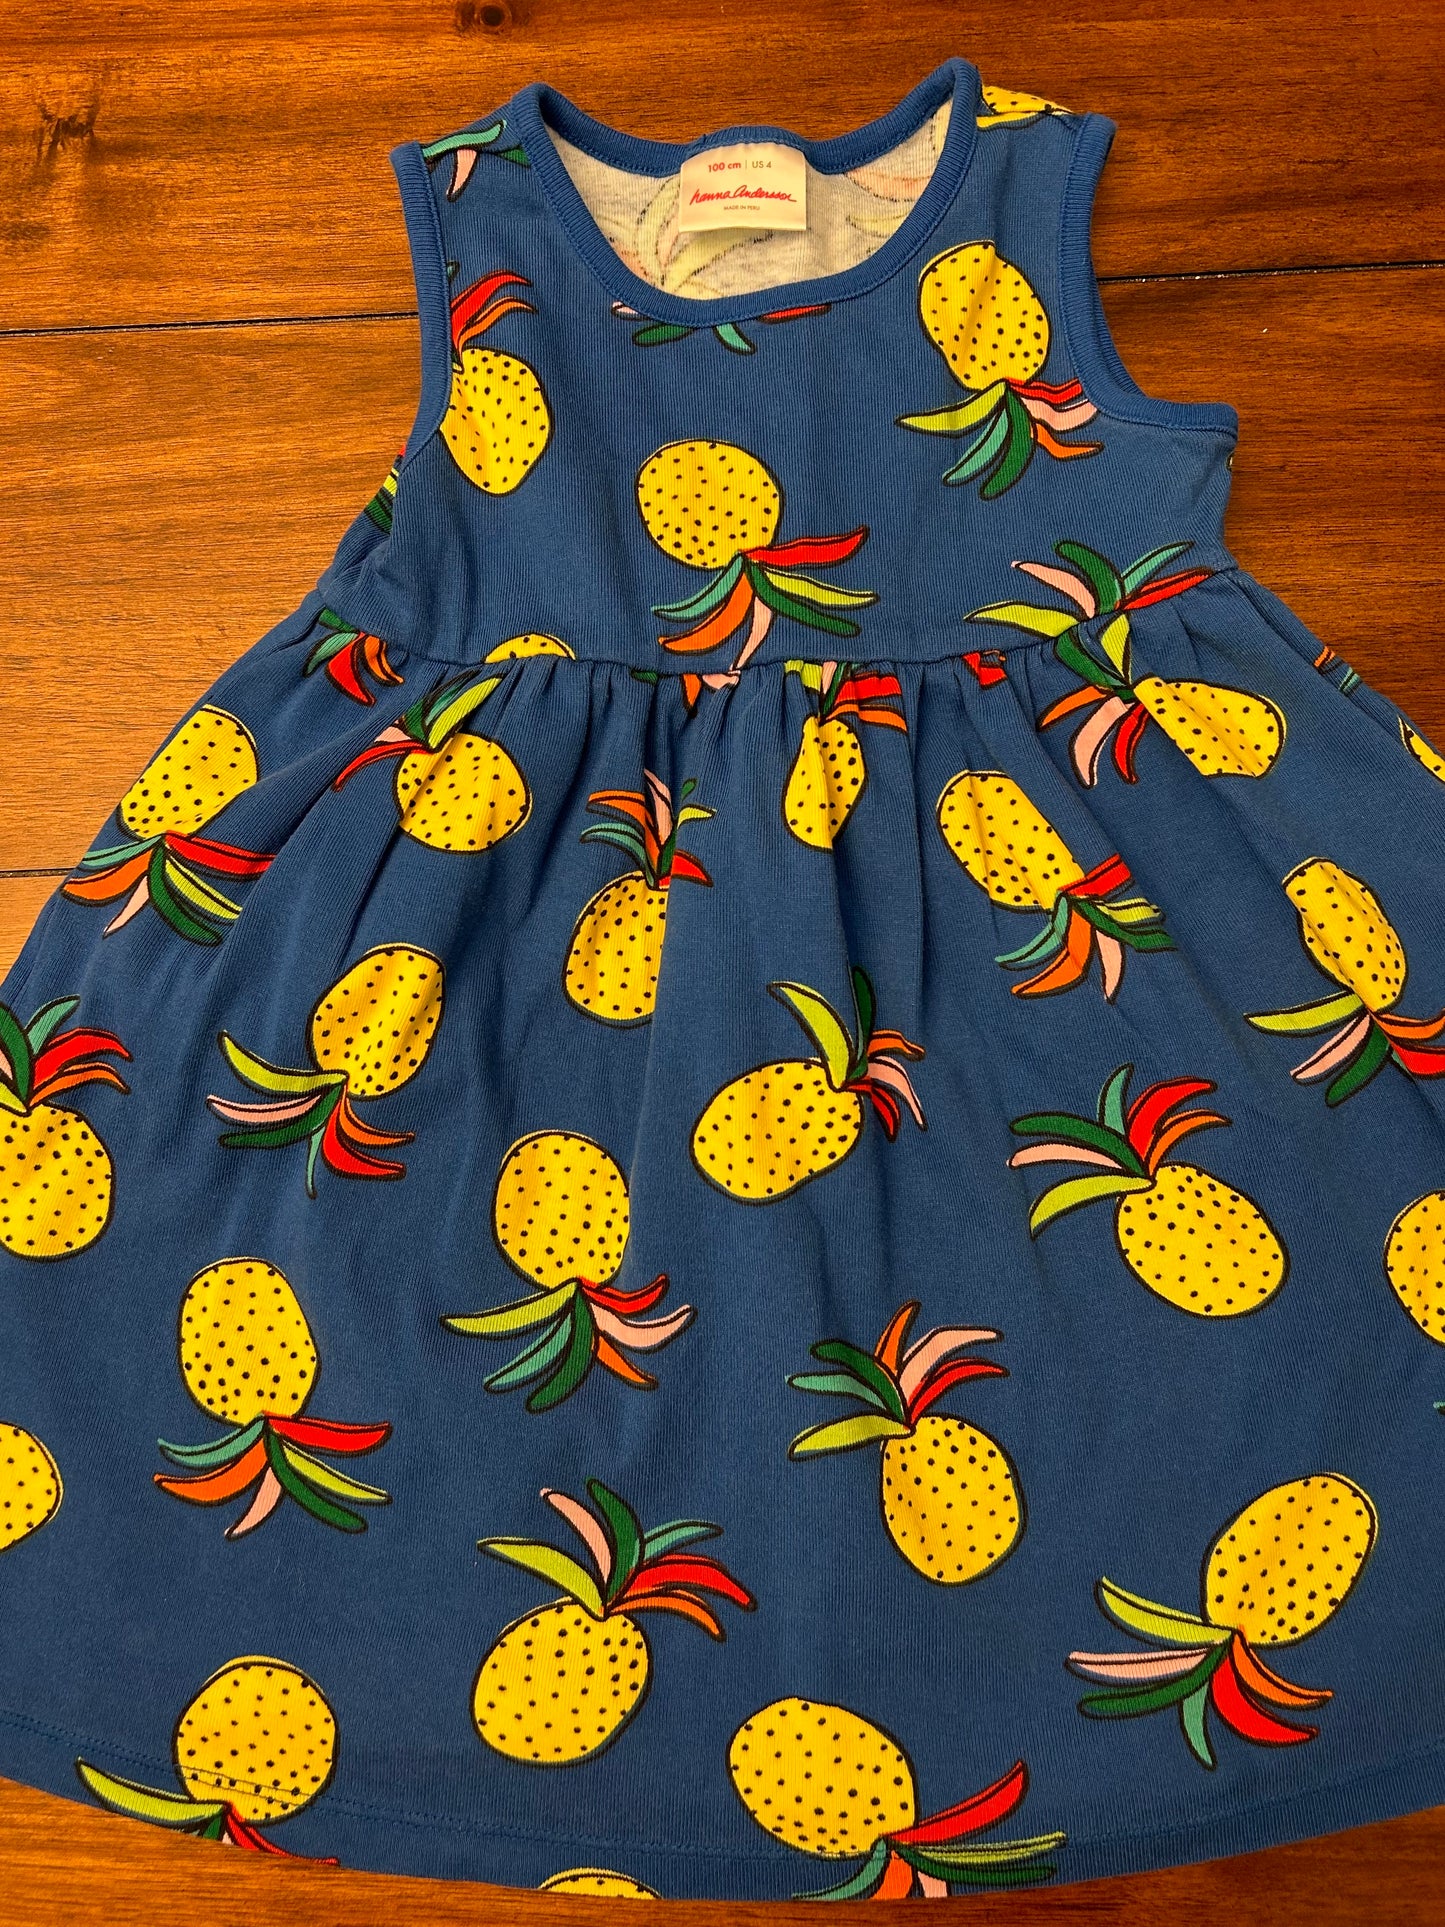 Hanna Andersson	Girls Royal Blue Pineapple Printed Super Soft Sleeveless Skater Dress Size 4 PPU 45040